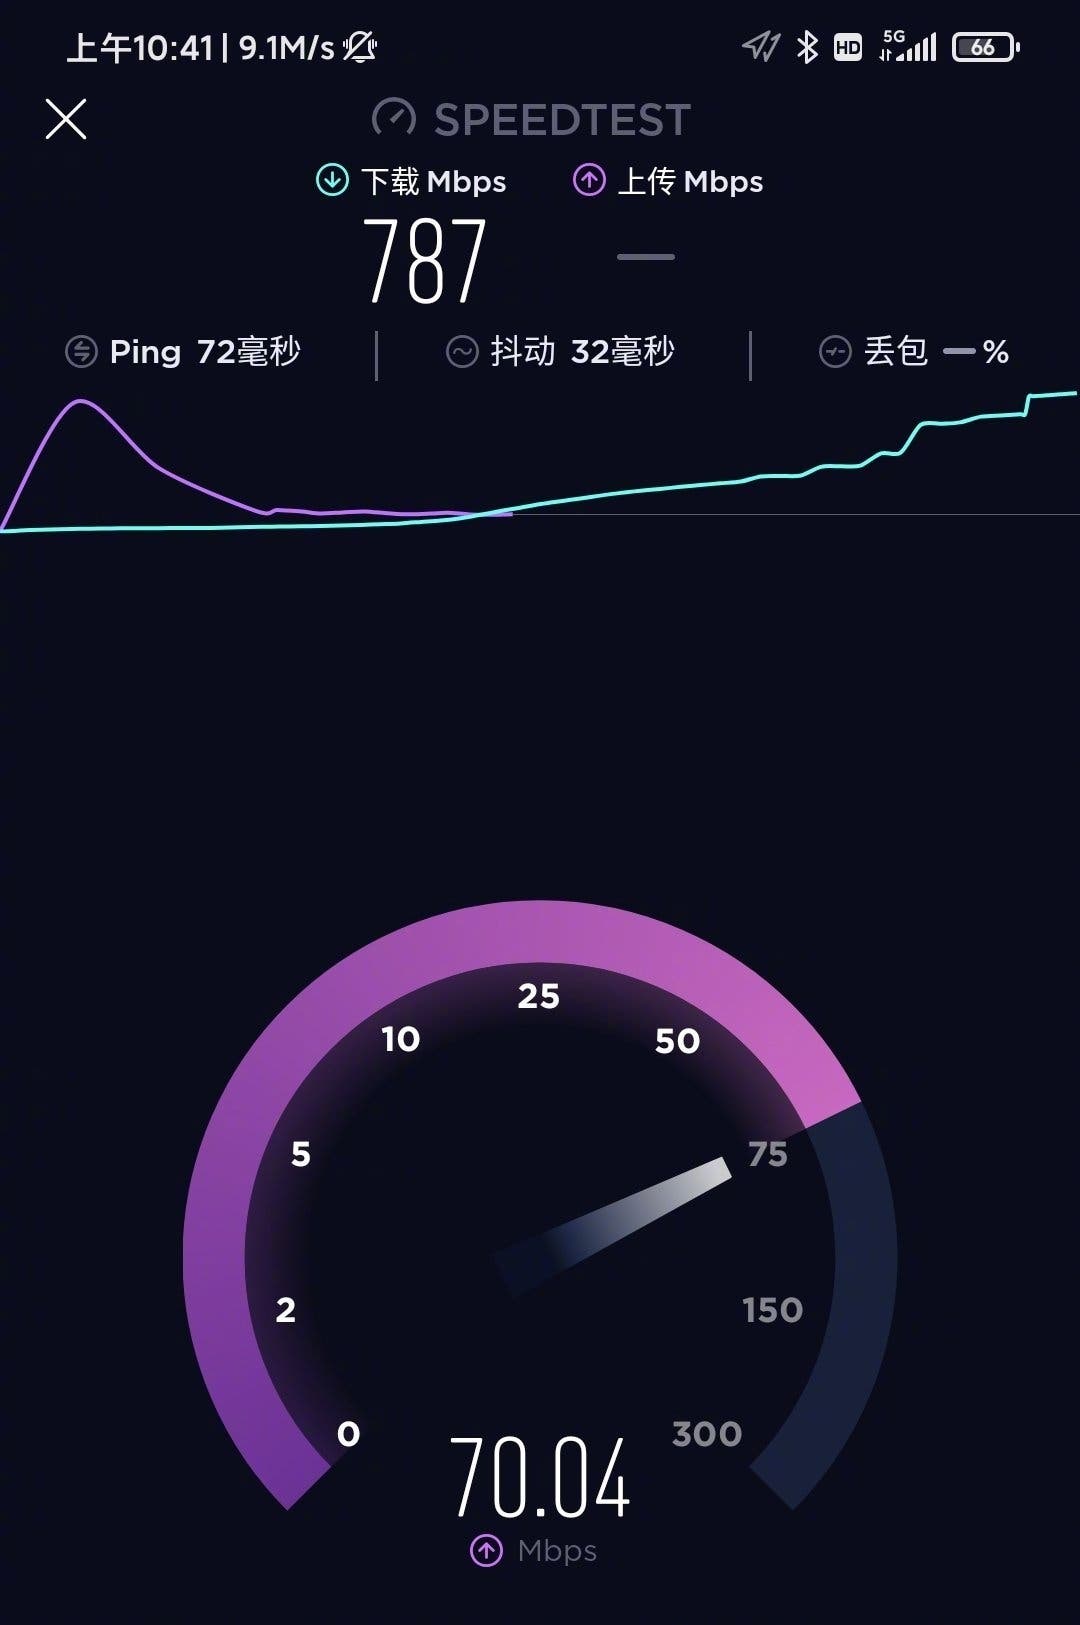 Xiaomi's 5G download speed